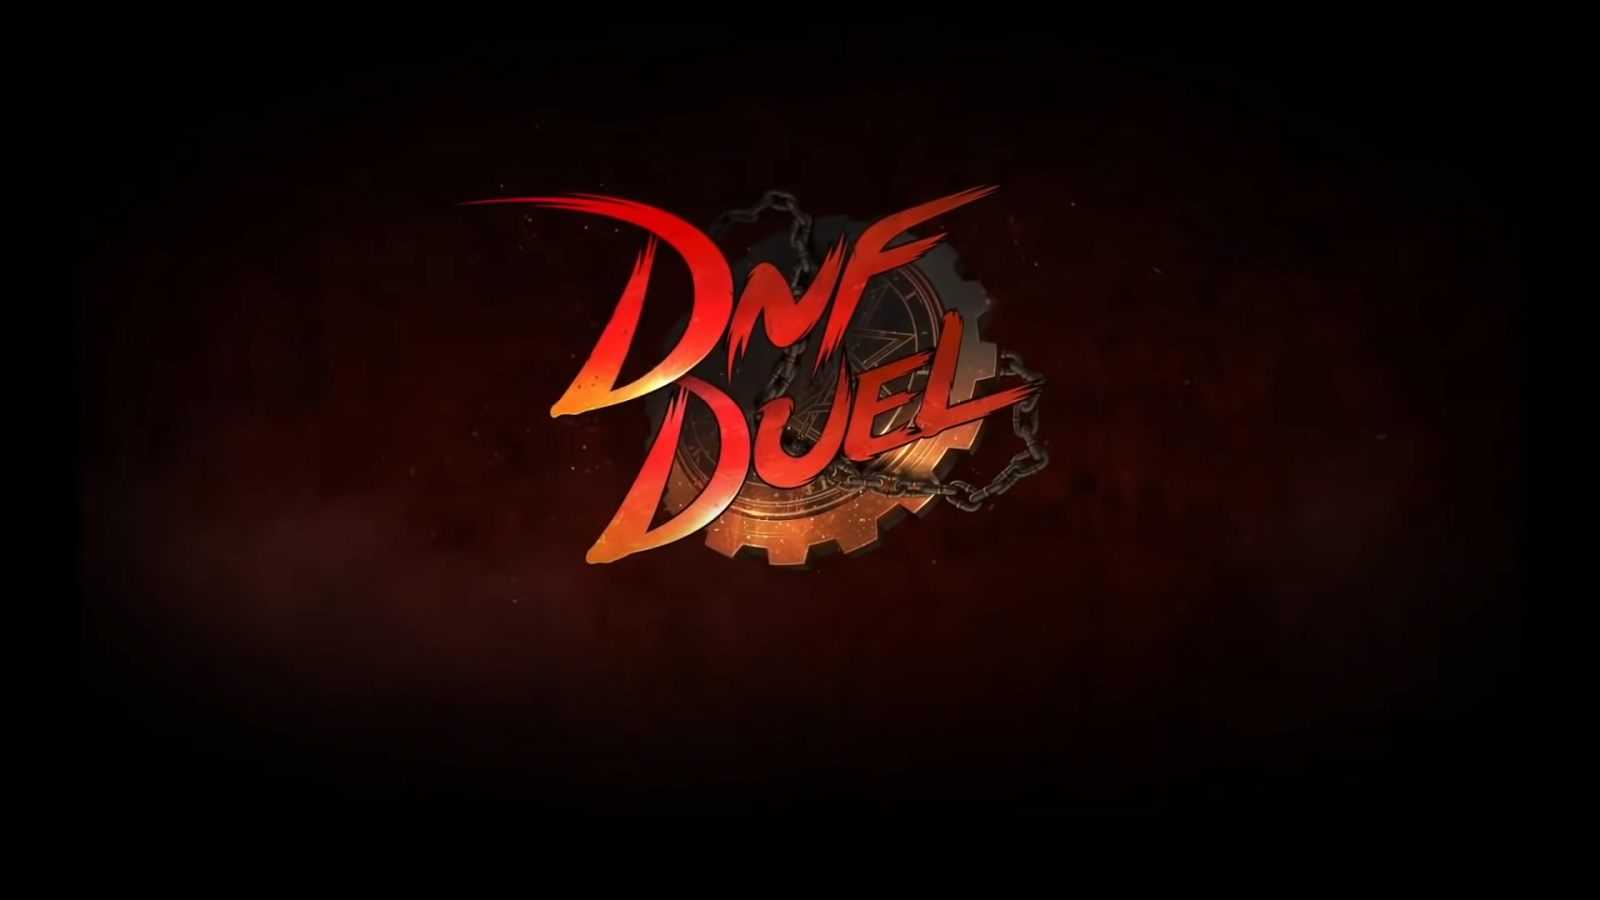 dnf duel season pass download